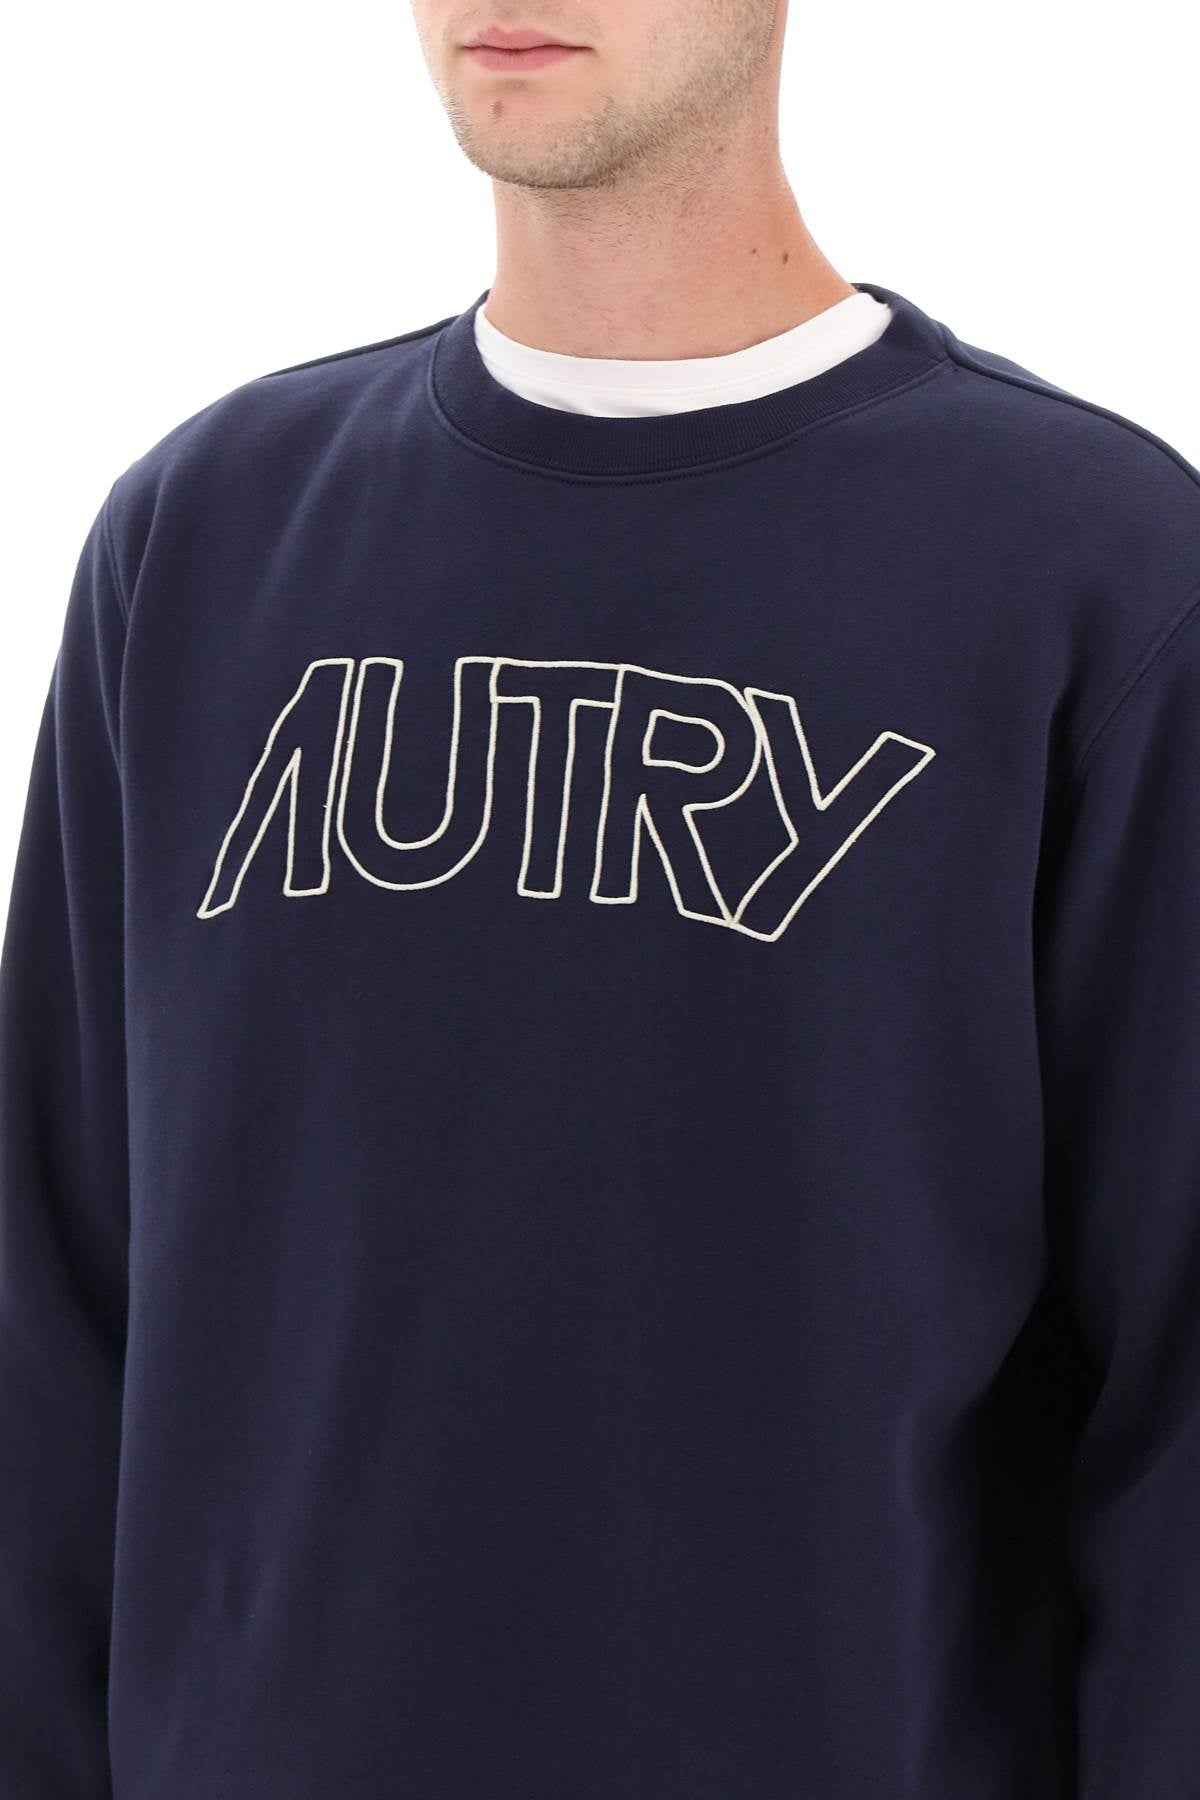 Autry Autry crew-neck sweatshirt with logo embroidery